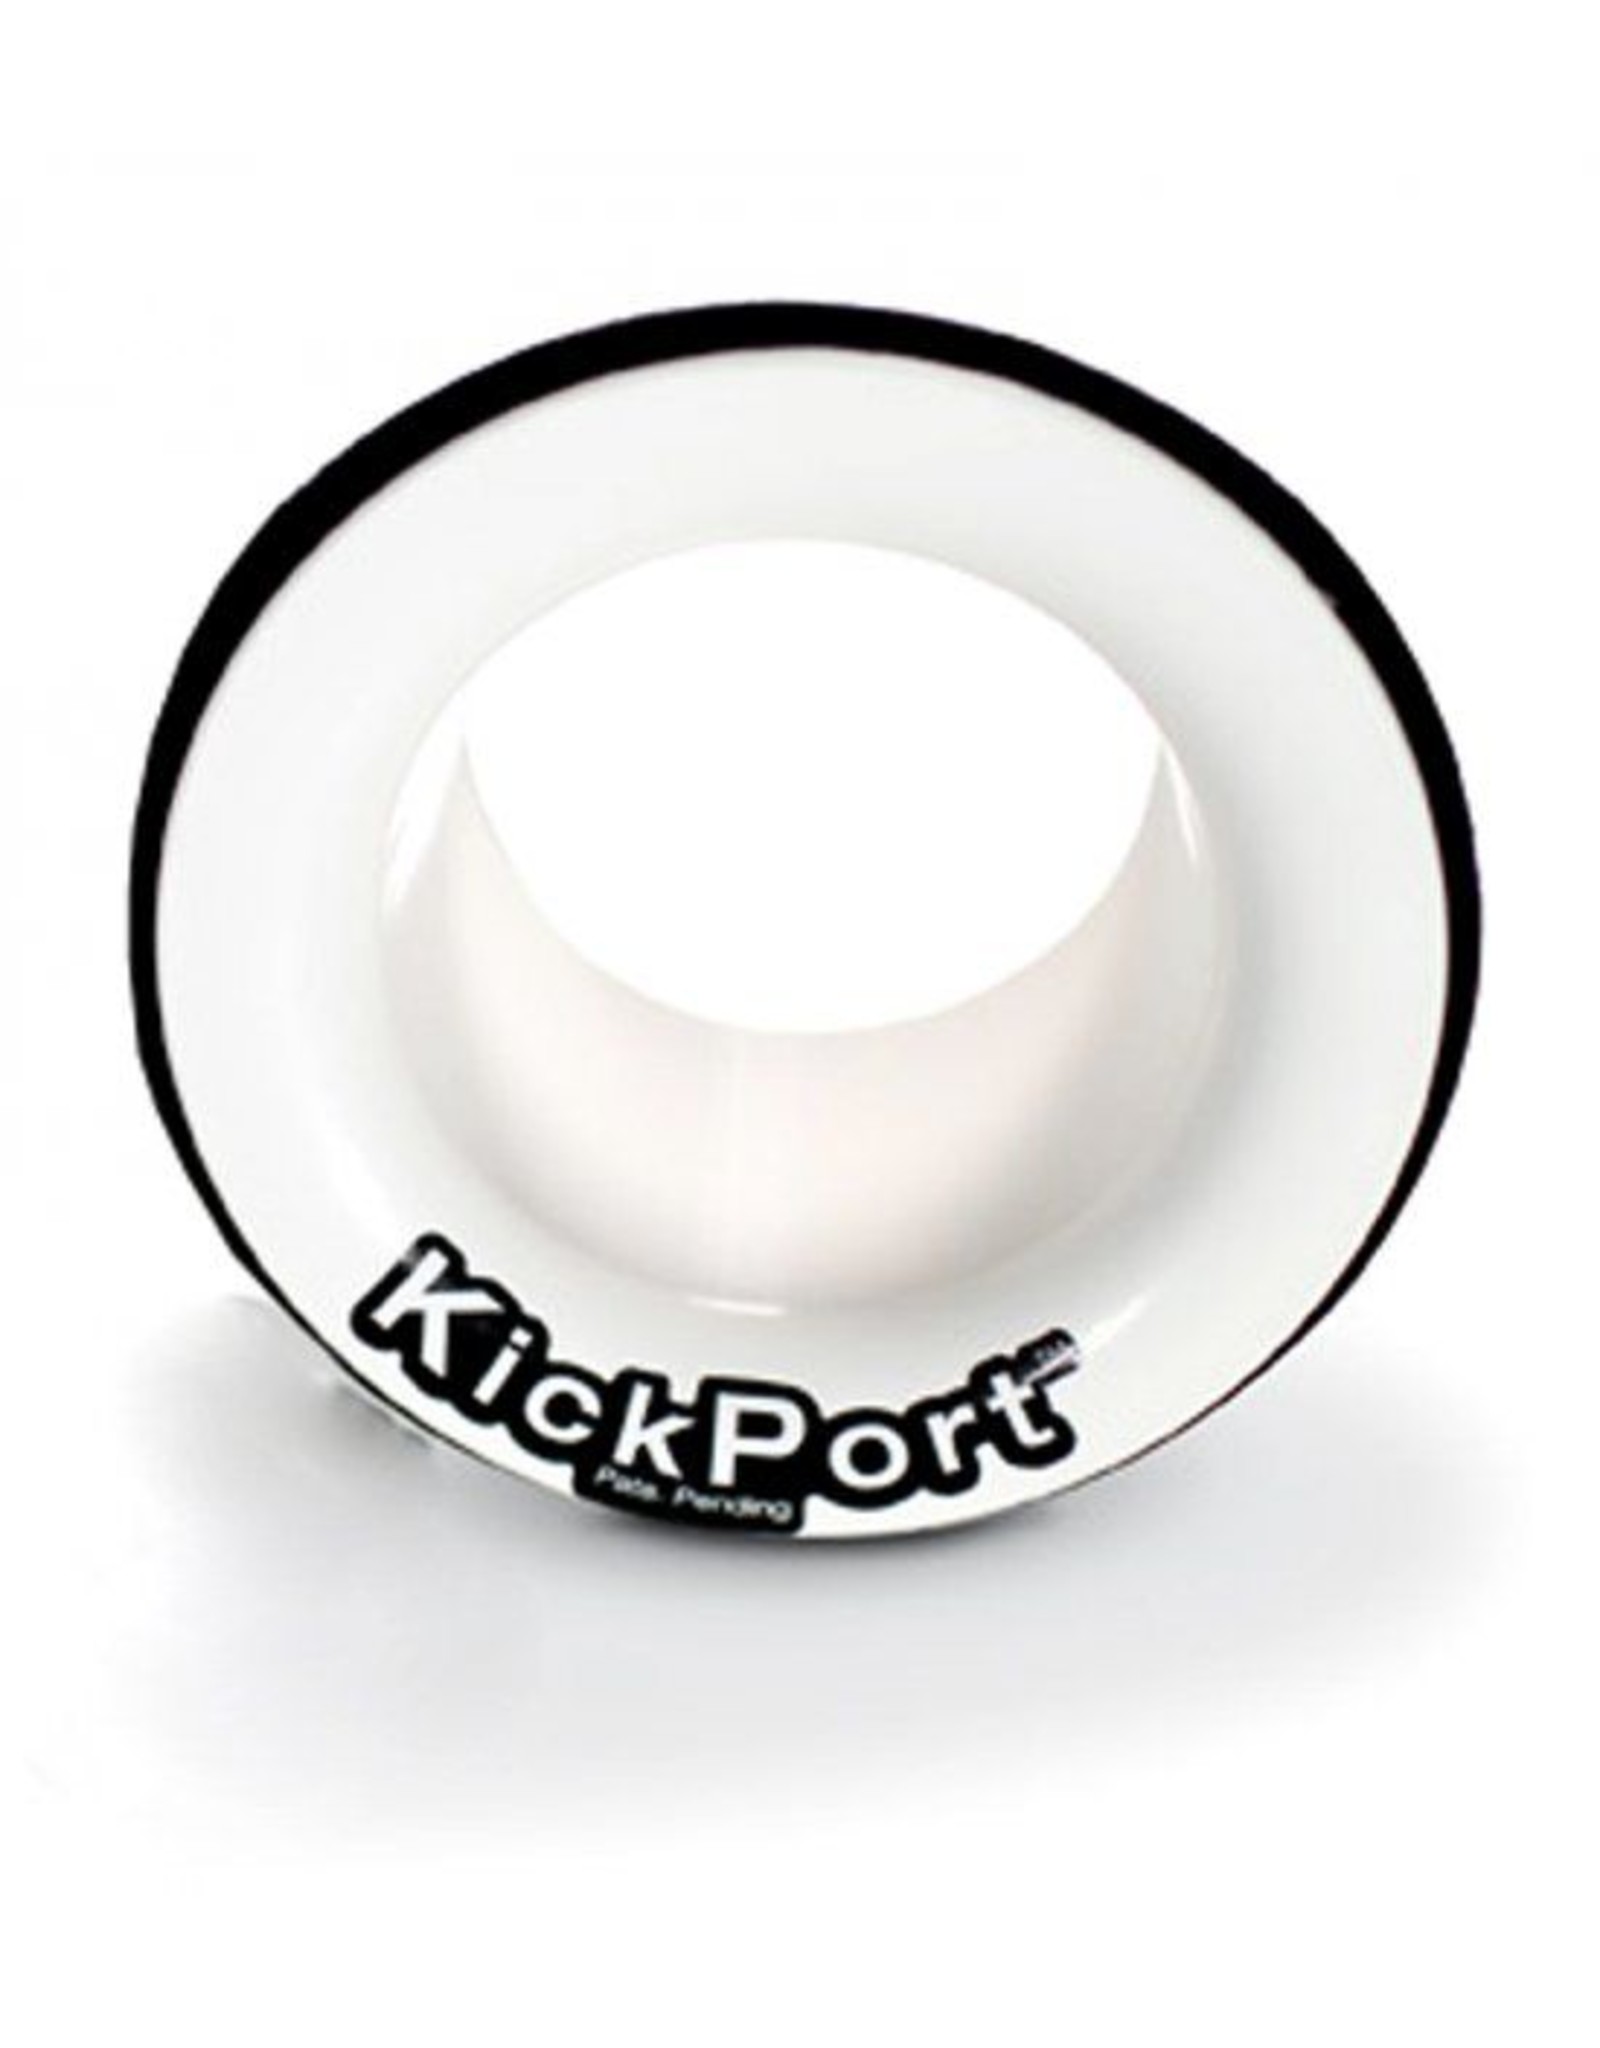 Kickport  KP2_BL black damping control bass booster